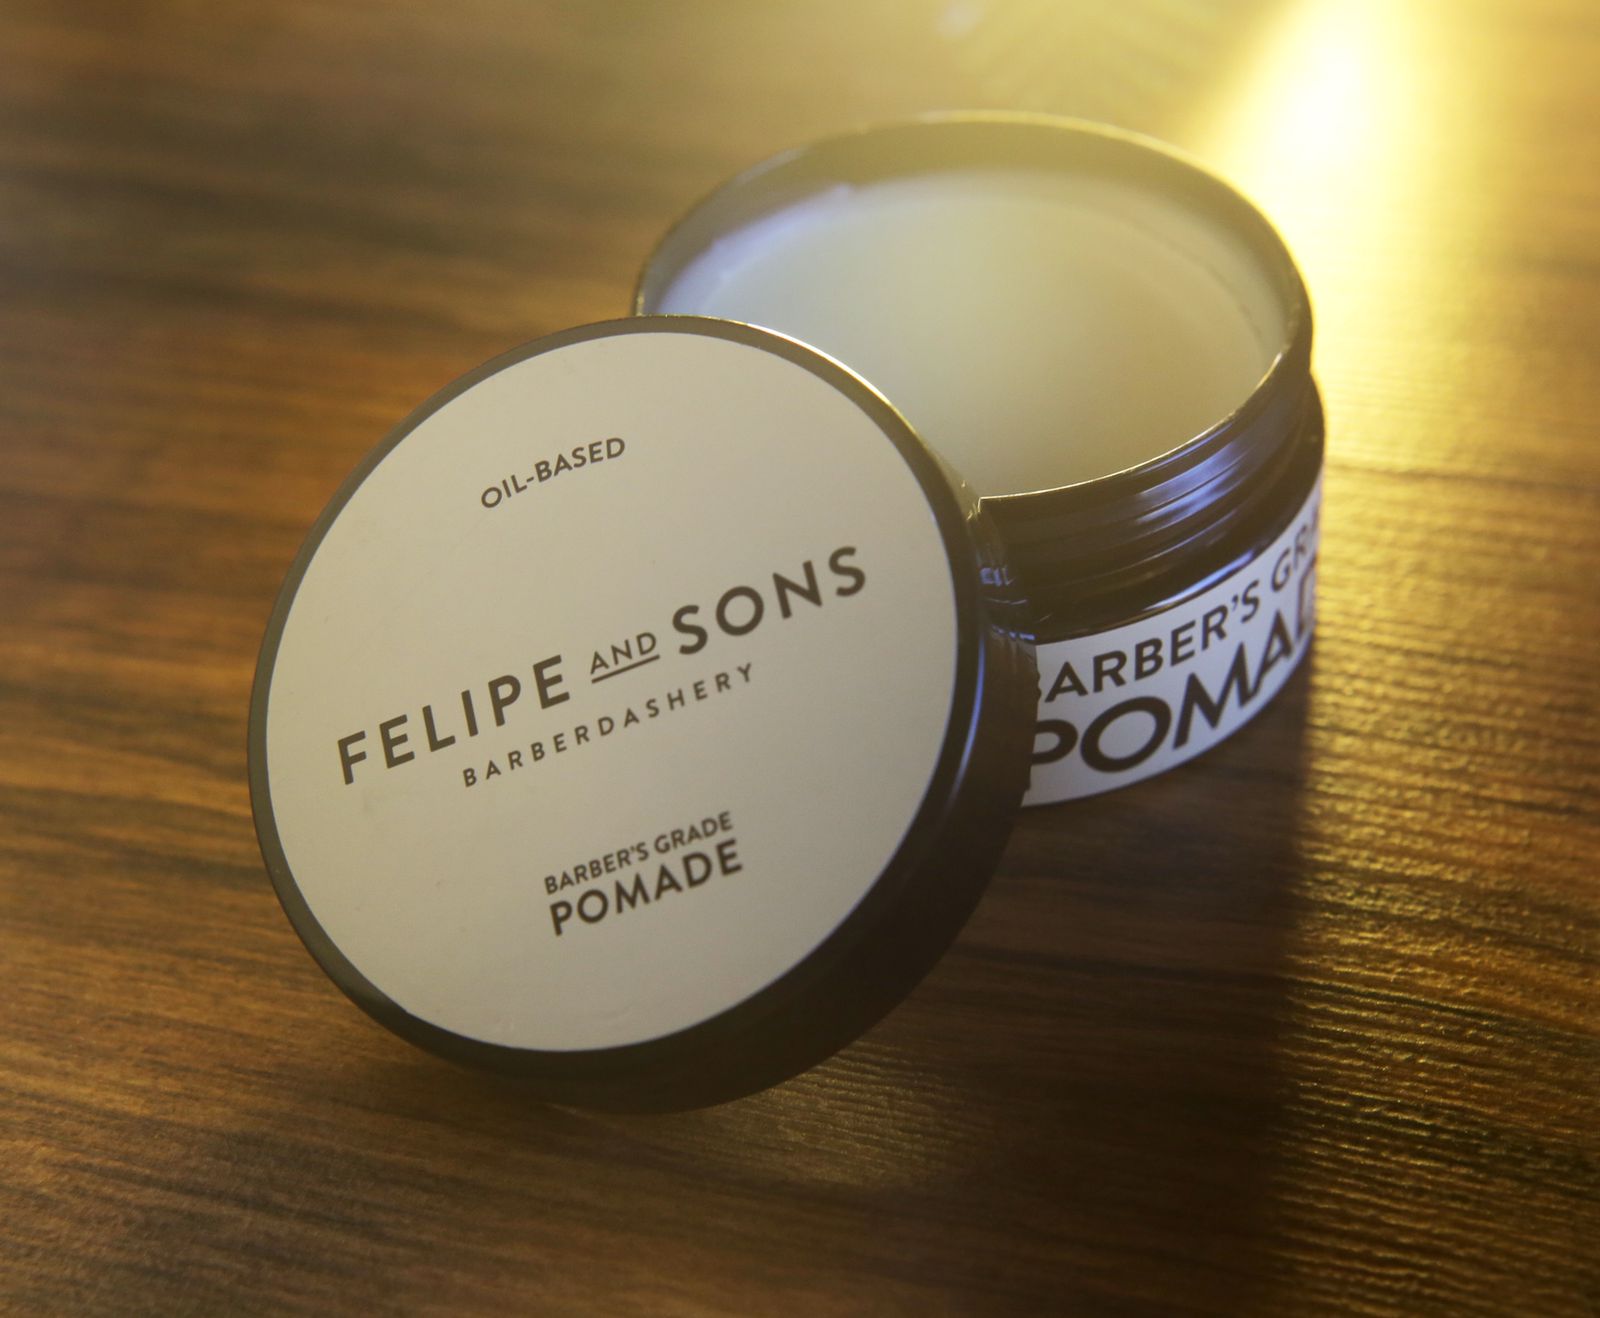 Felipe And Sons ₱100 PH Gift Card